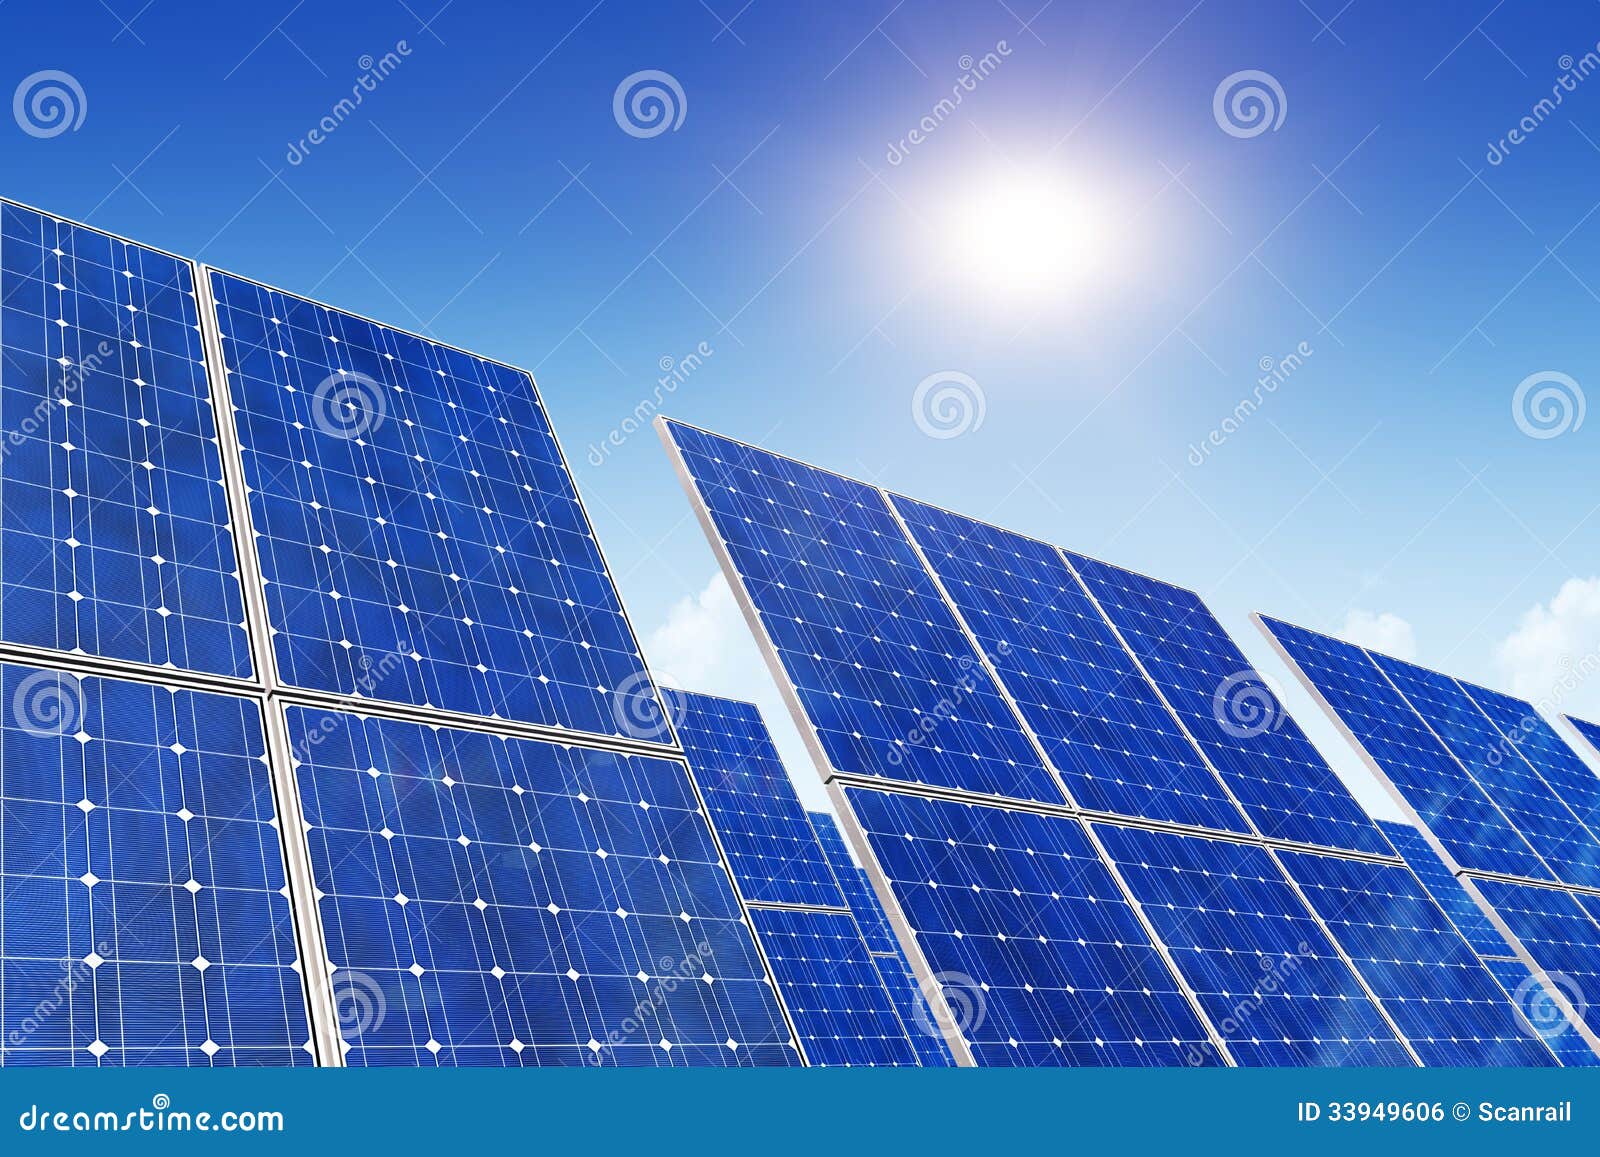 Creative solar power generation technology, alternative energy and 